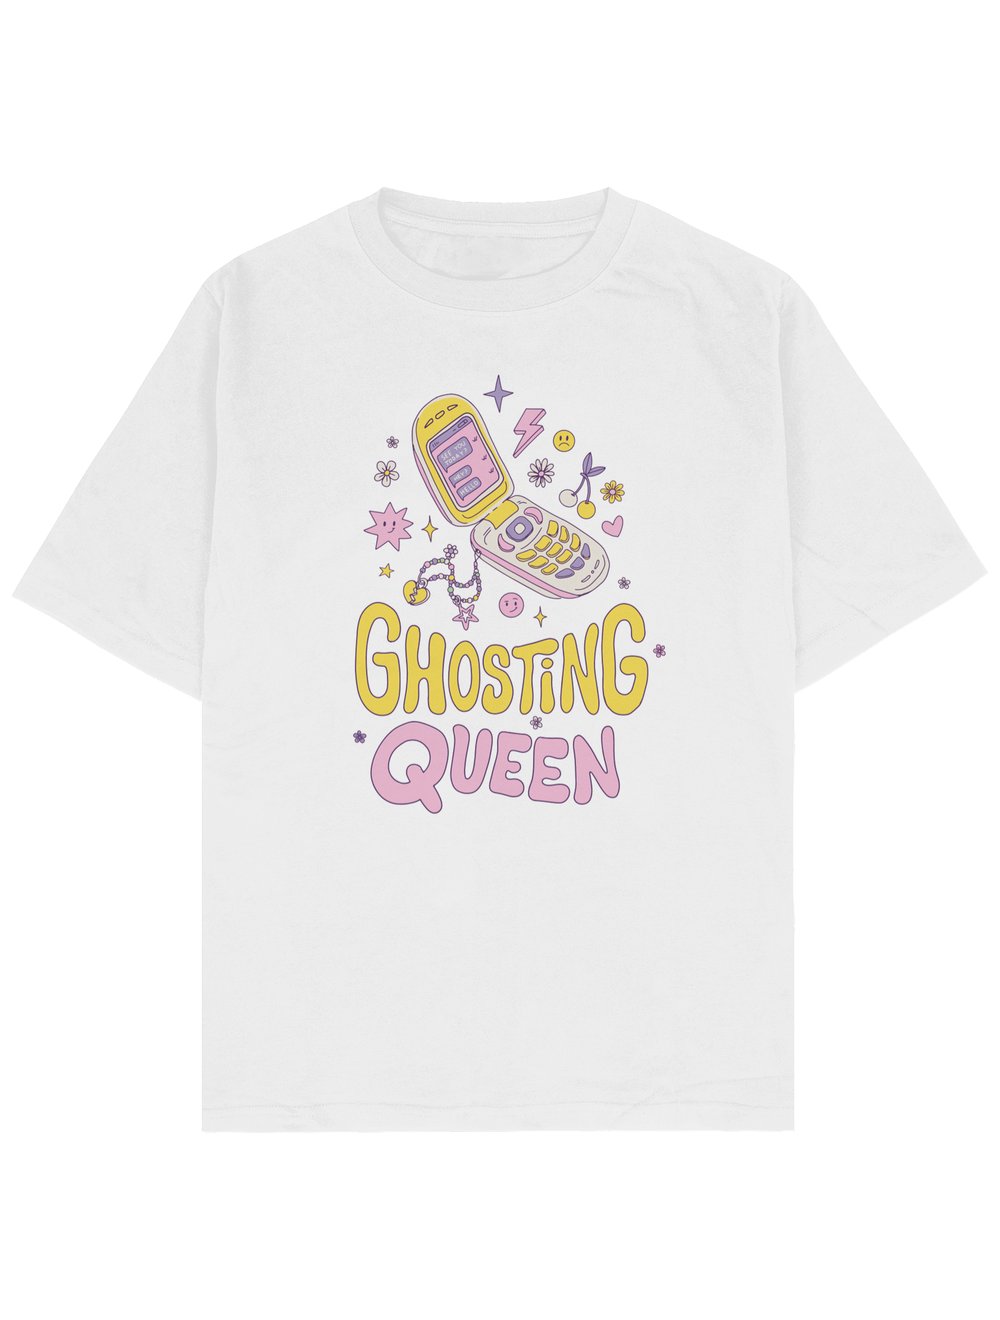 Ghosting Queen